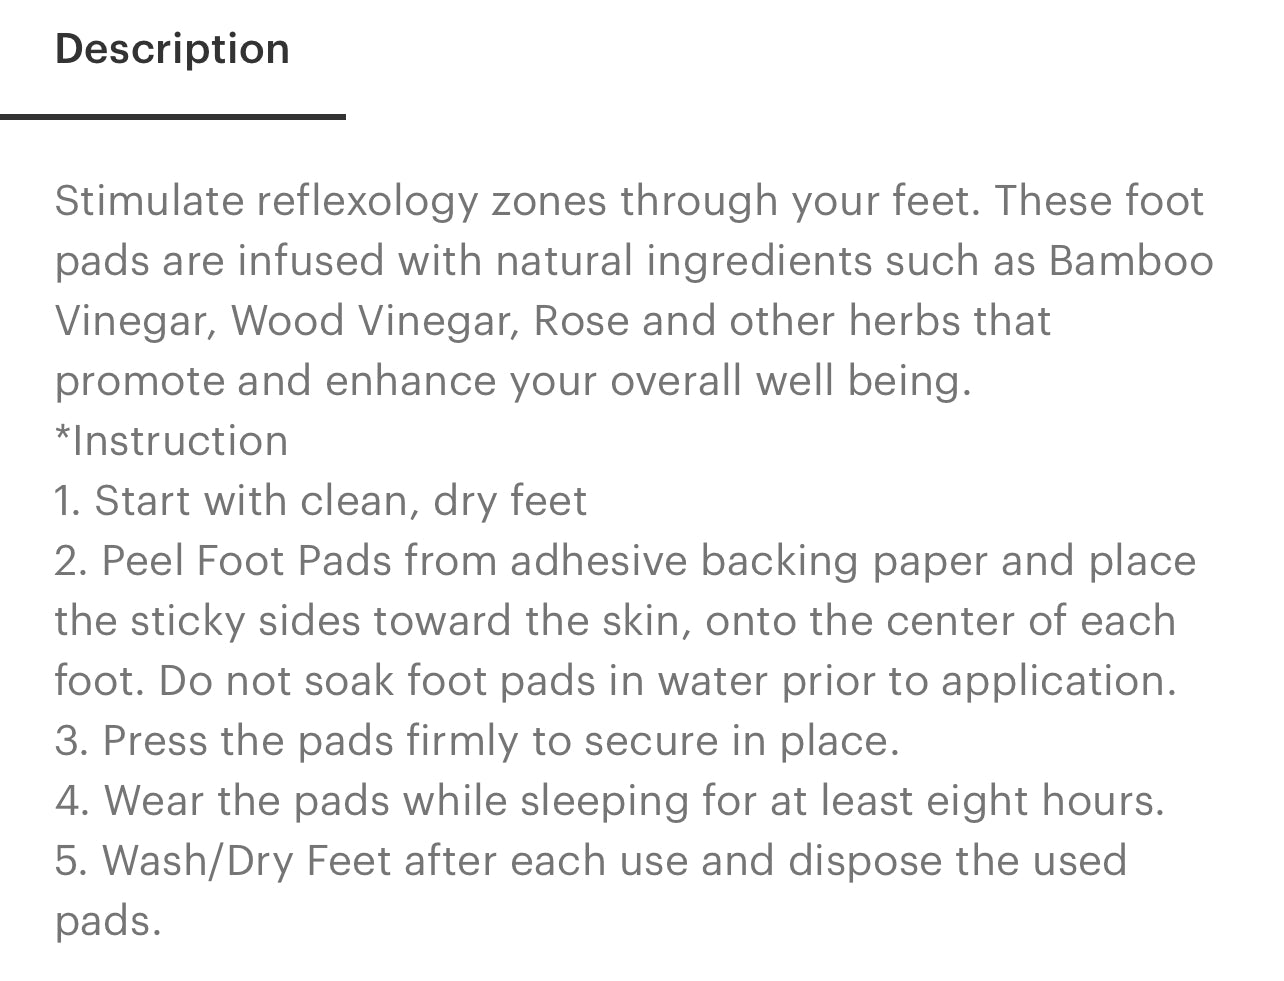 Detoxifying Foot Pads - Rose - 10 pk